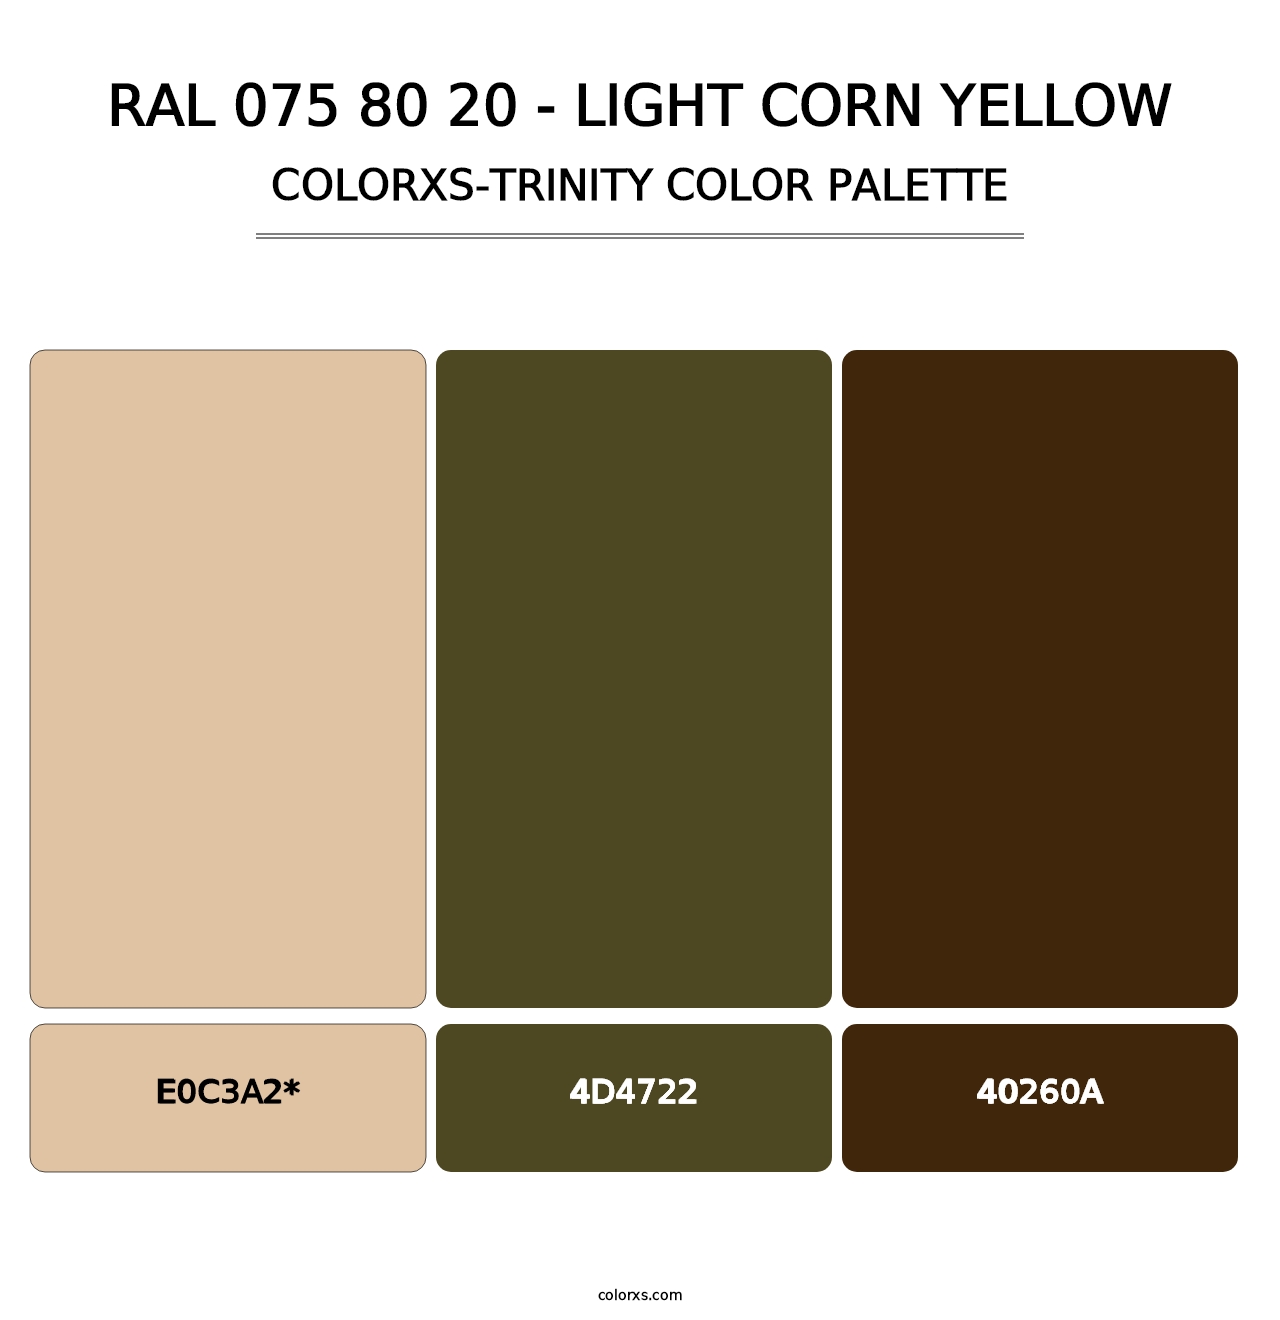 RAL 075 80 20 - Light Corn Yellow - Colorxs Trinity Palette